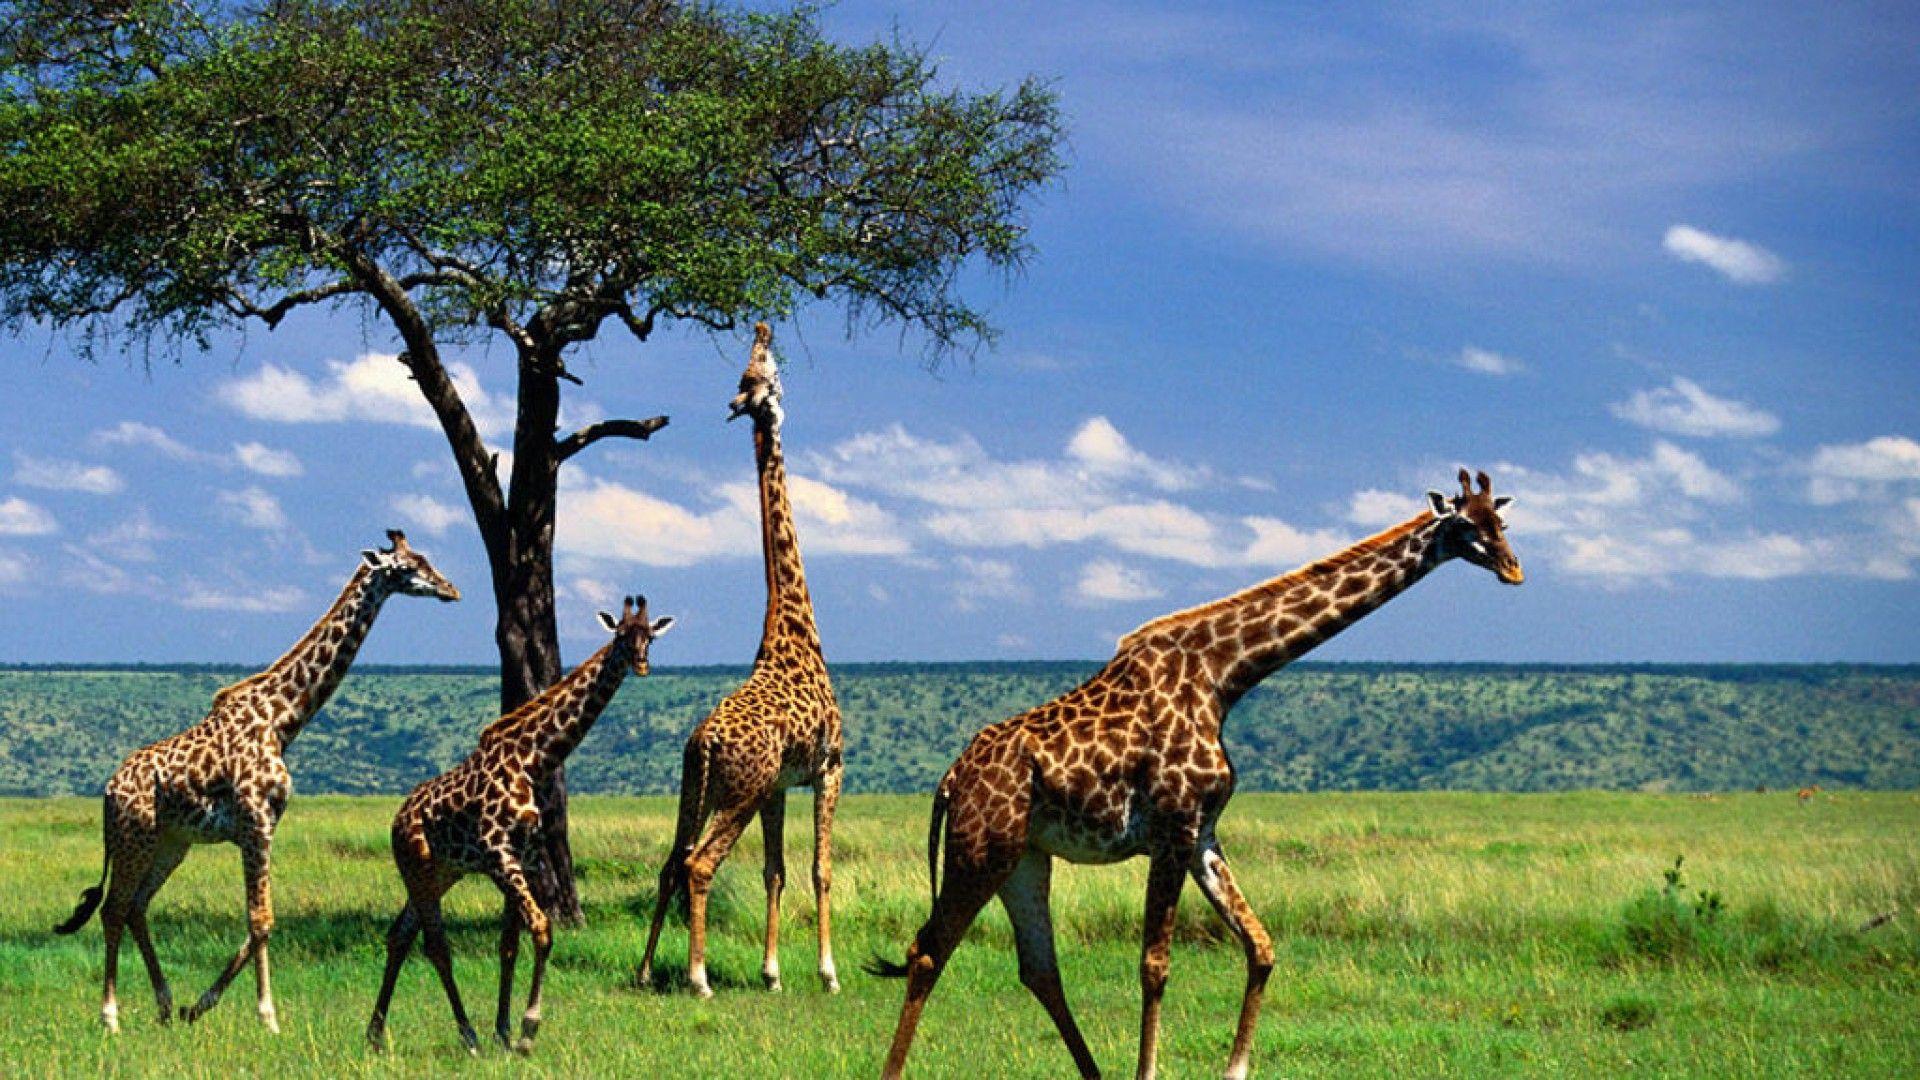 Giraffe HD Wallpaper Free Download